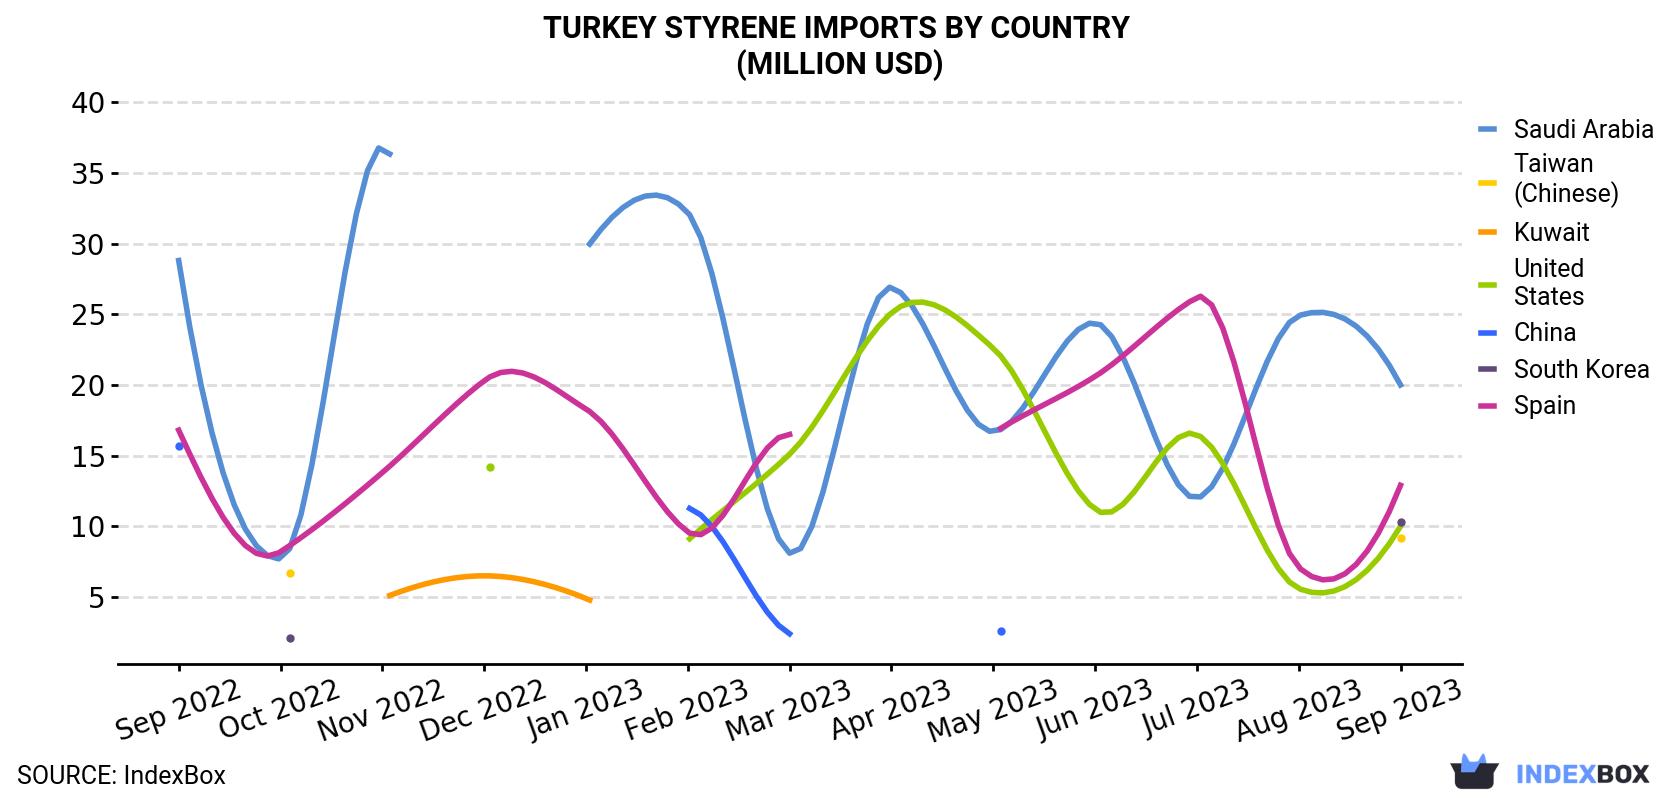 Turkey Styrene Imports By Country (Million USD)